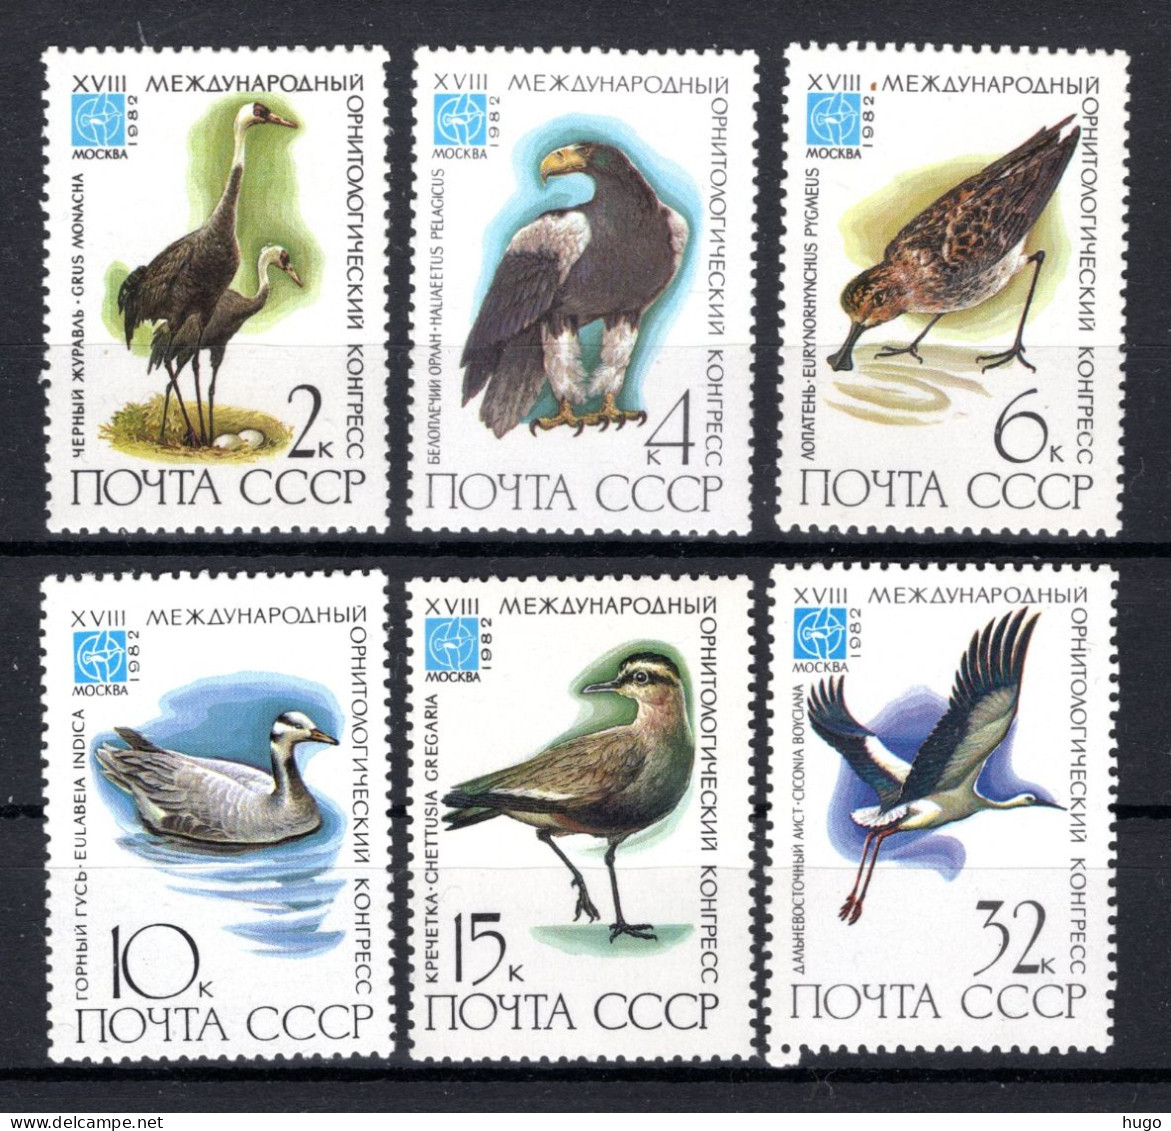 RUSLAND Yt. 4913/4918 MNH 1982 - Unused Stamps